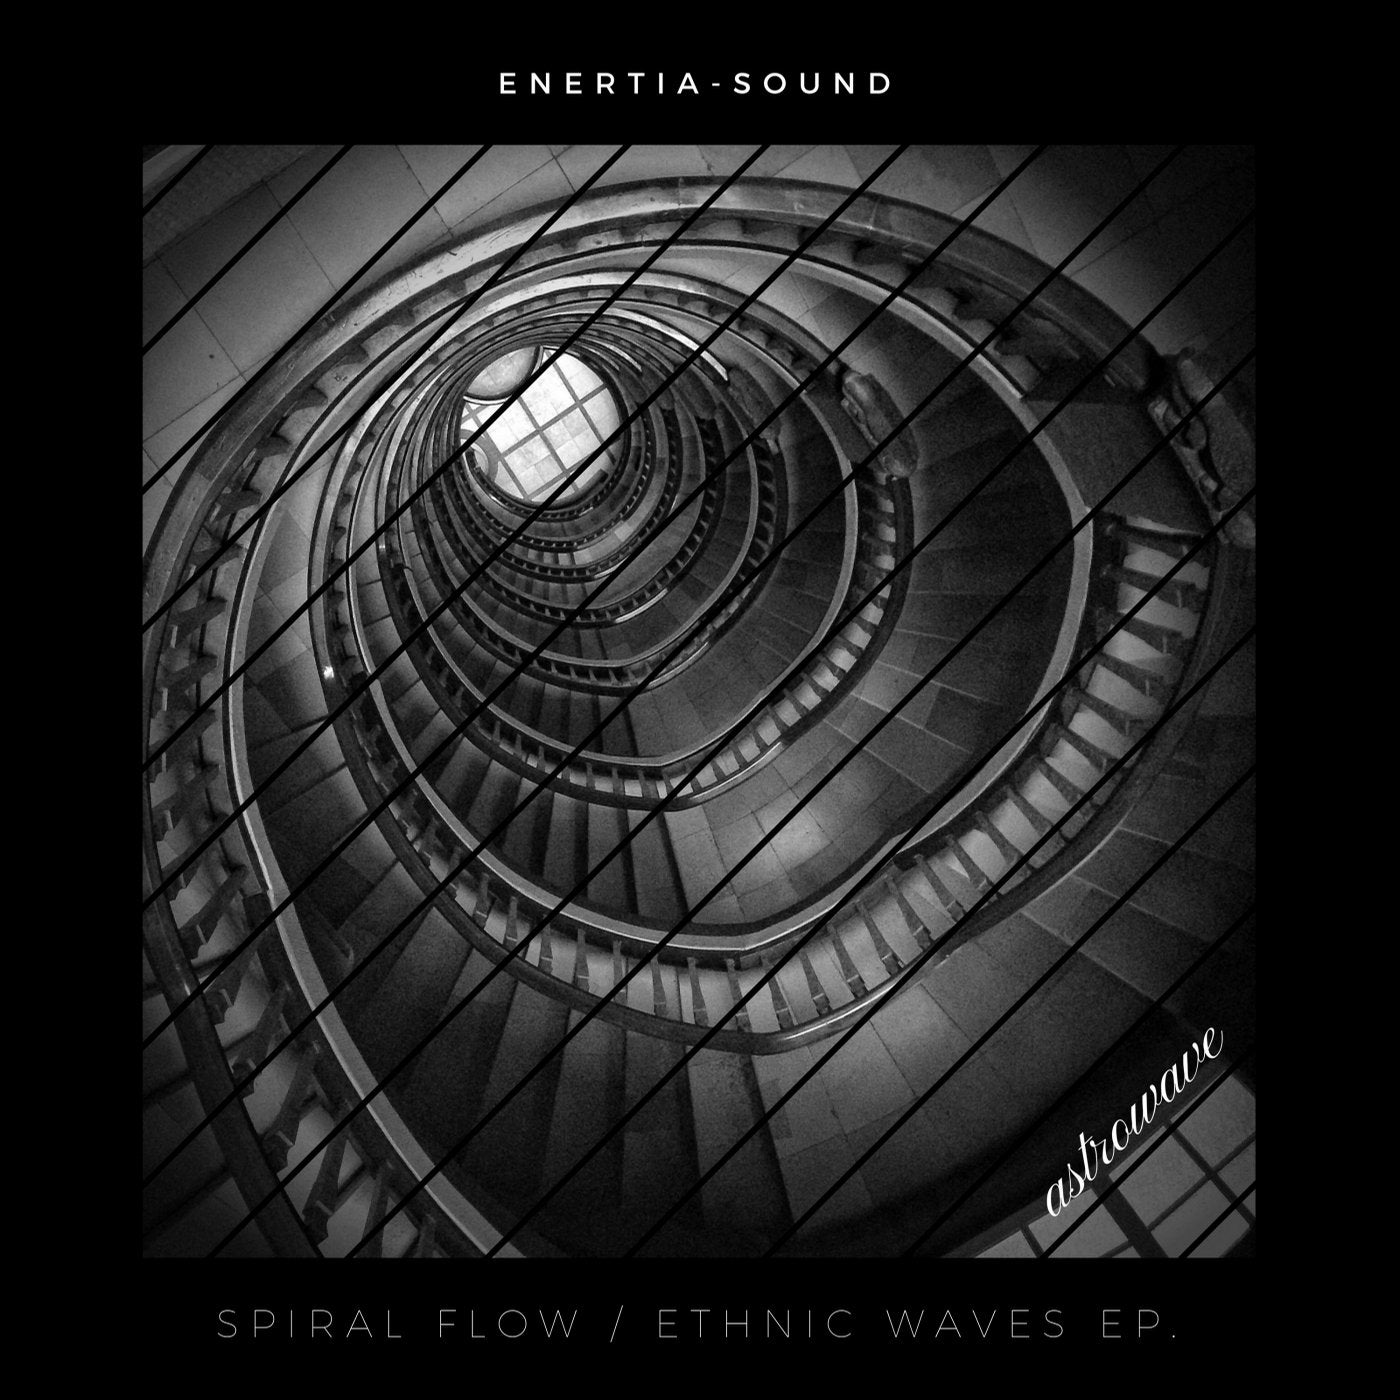 Spiral Flow/Ethnic Waves